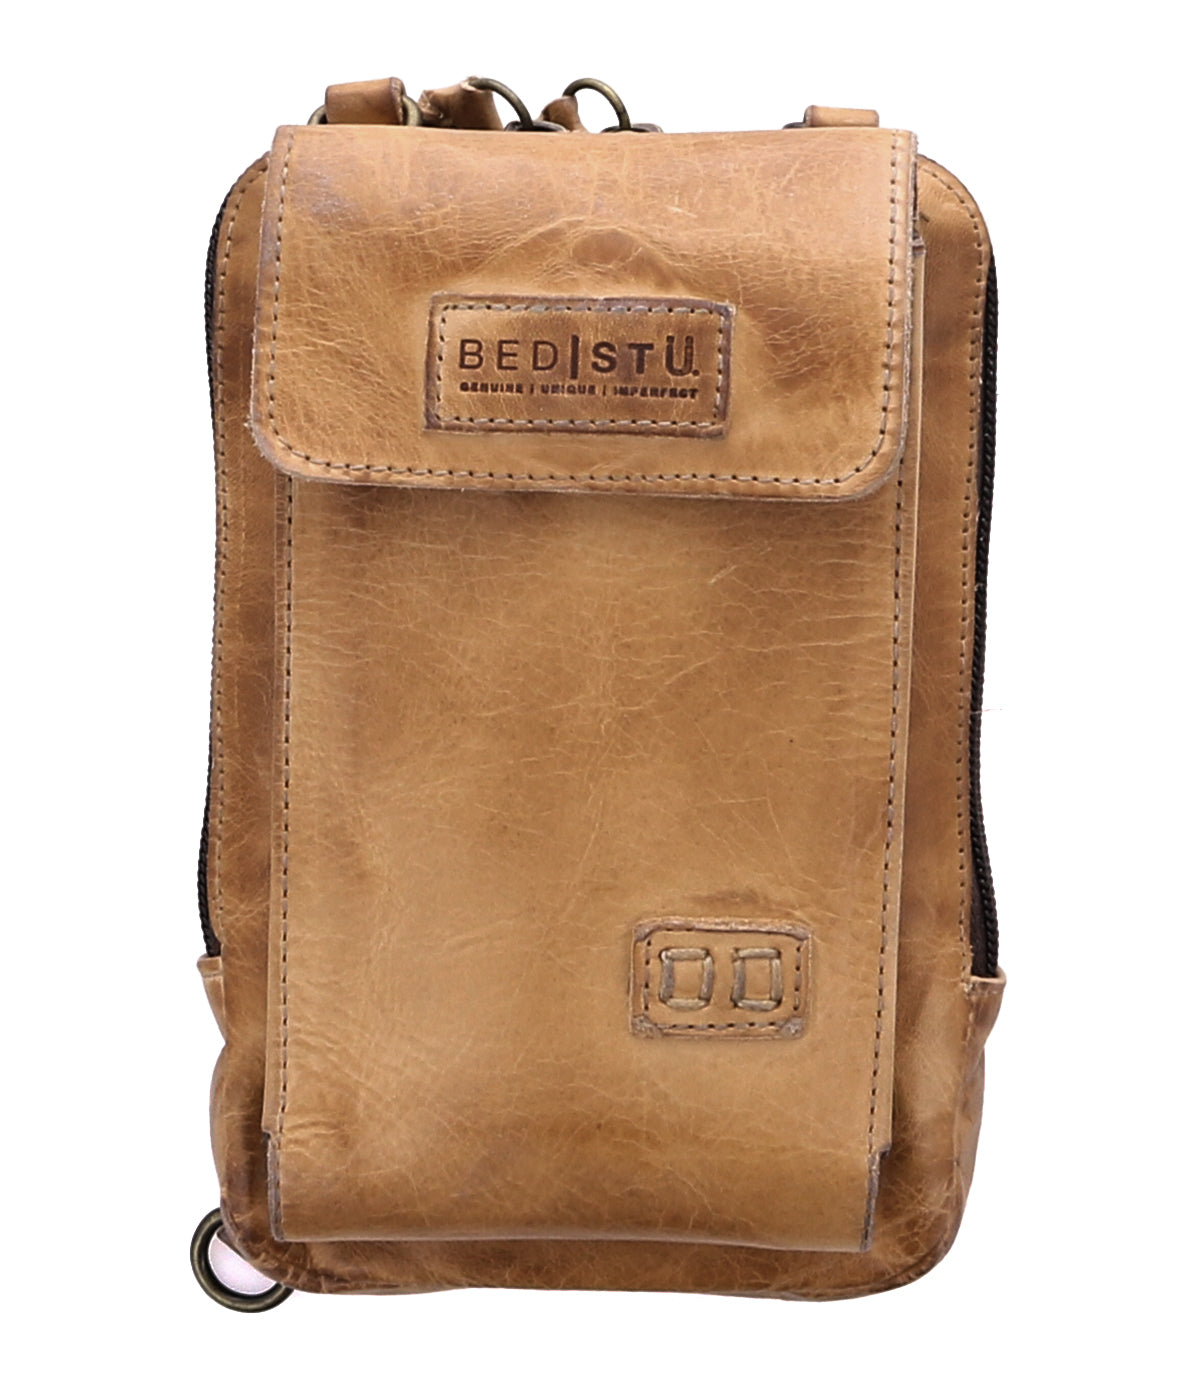 A Bed Stu Alelike, a premium leather bag with a zipper.